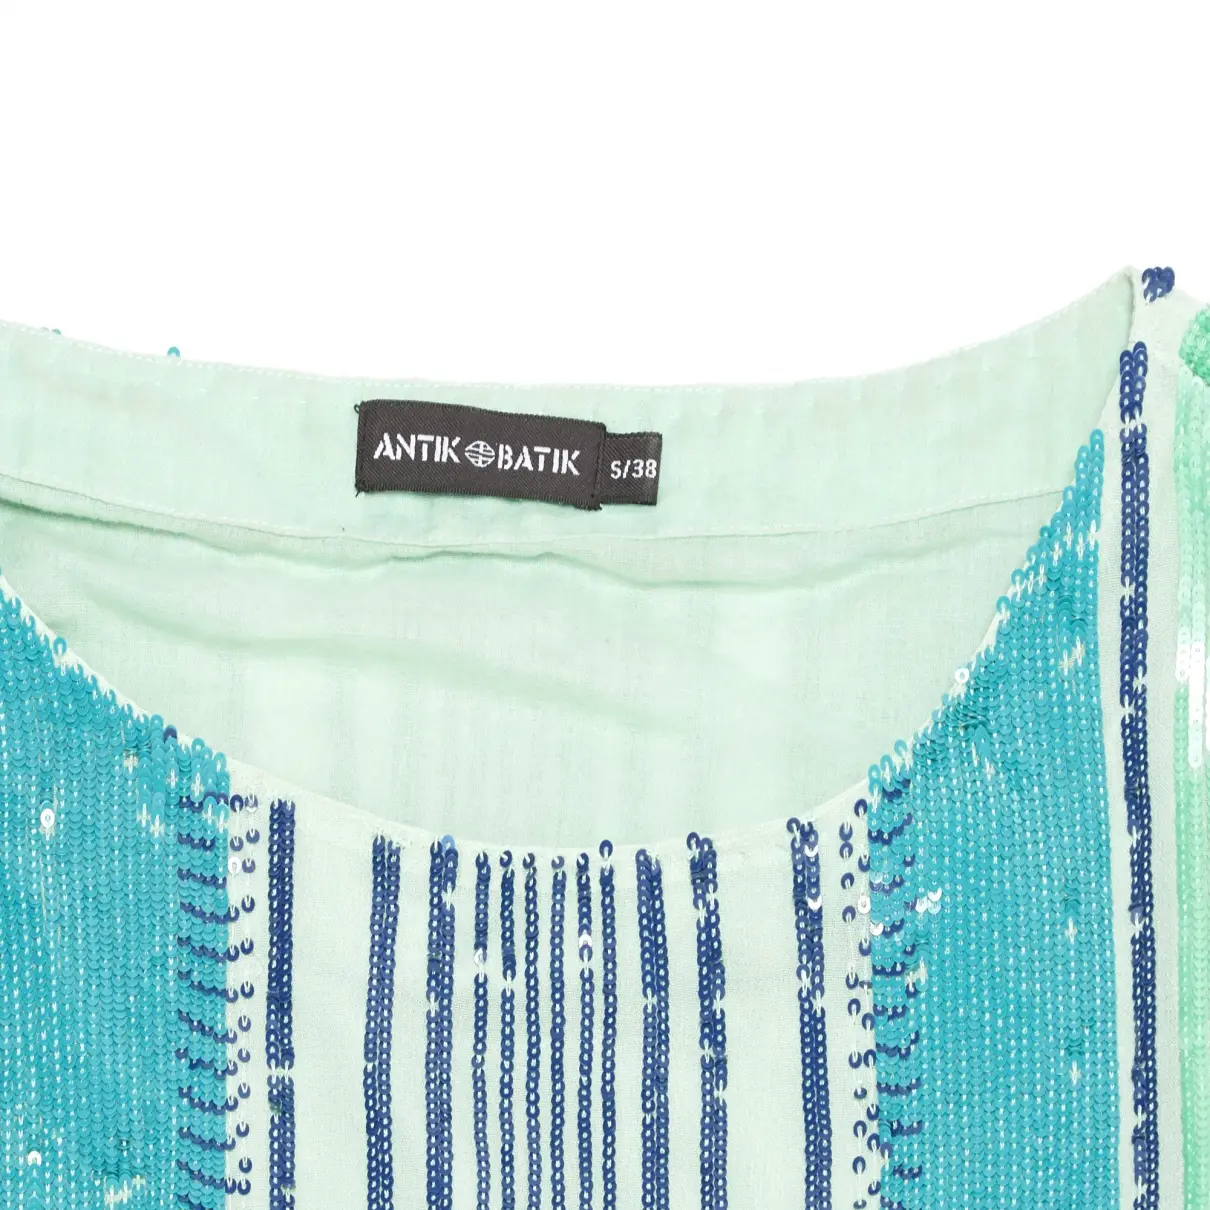 Buy Antik Batik T-shirt online